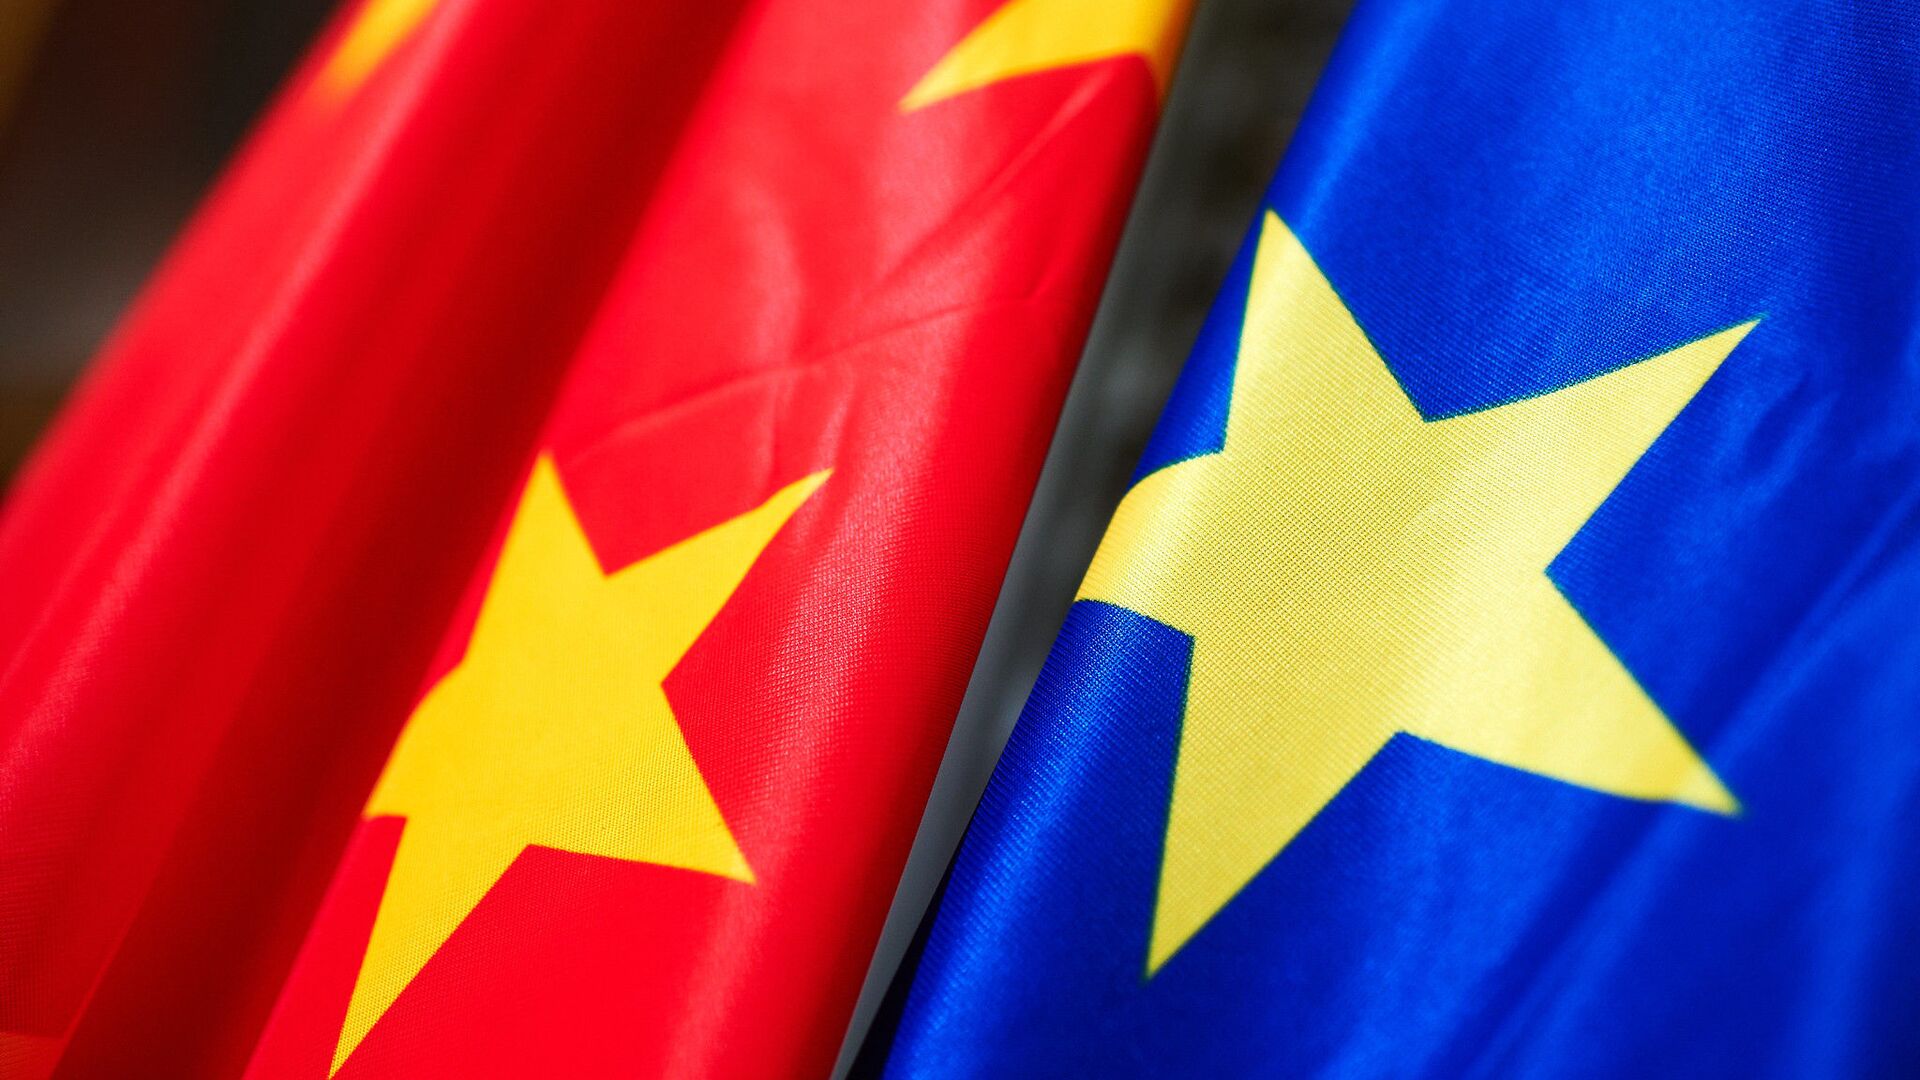 EU China flags - Sputnik International, 1920, 23.03.2021